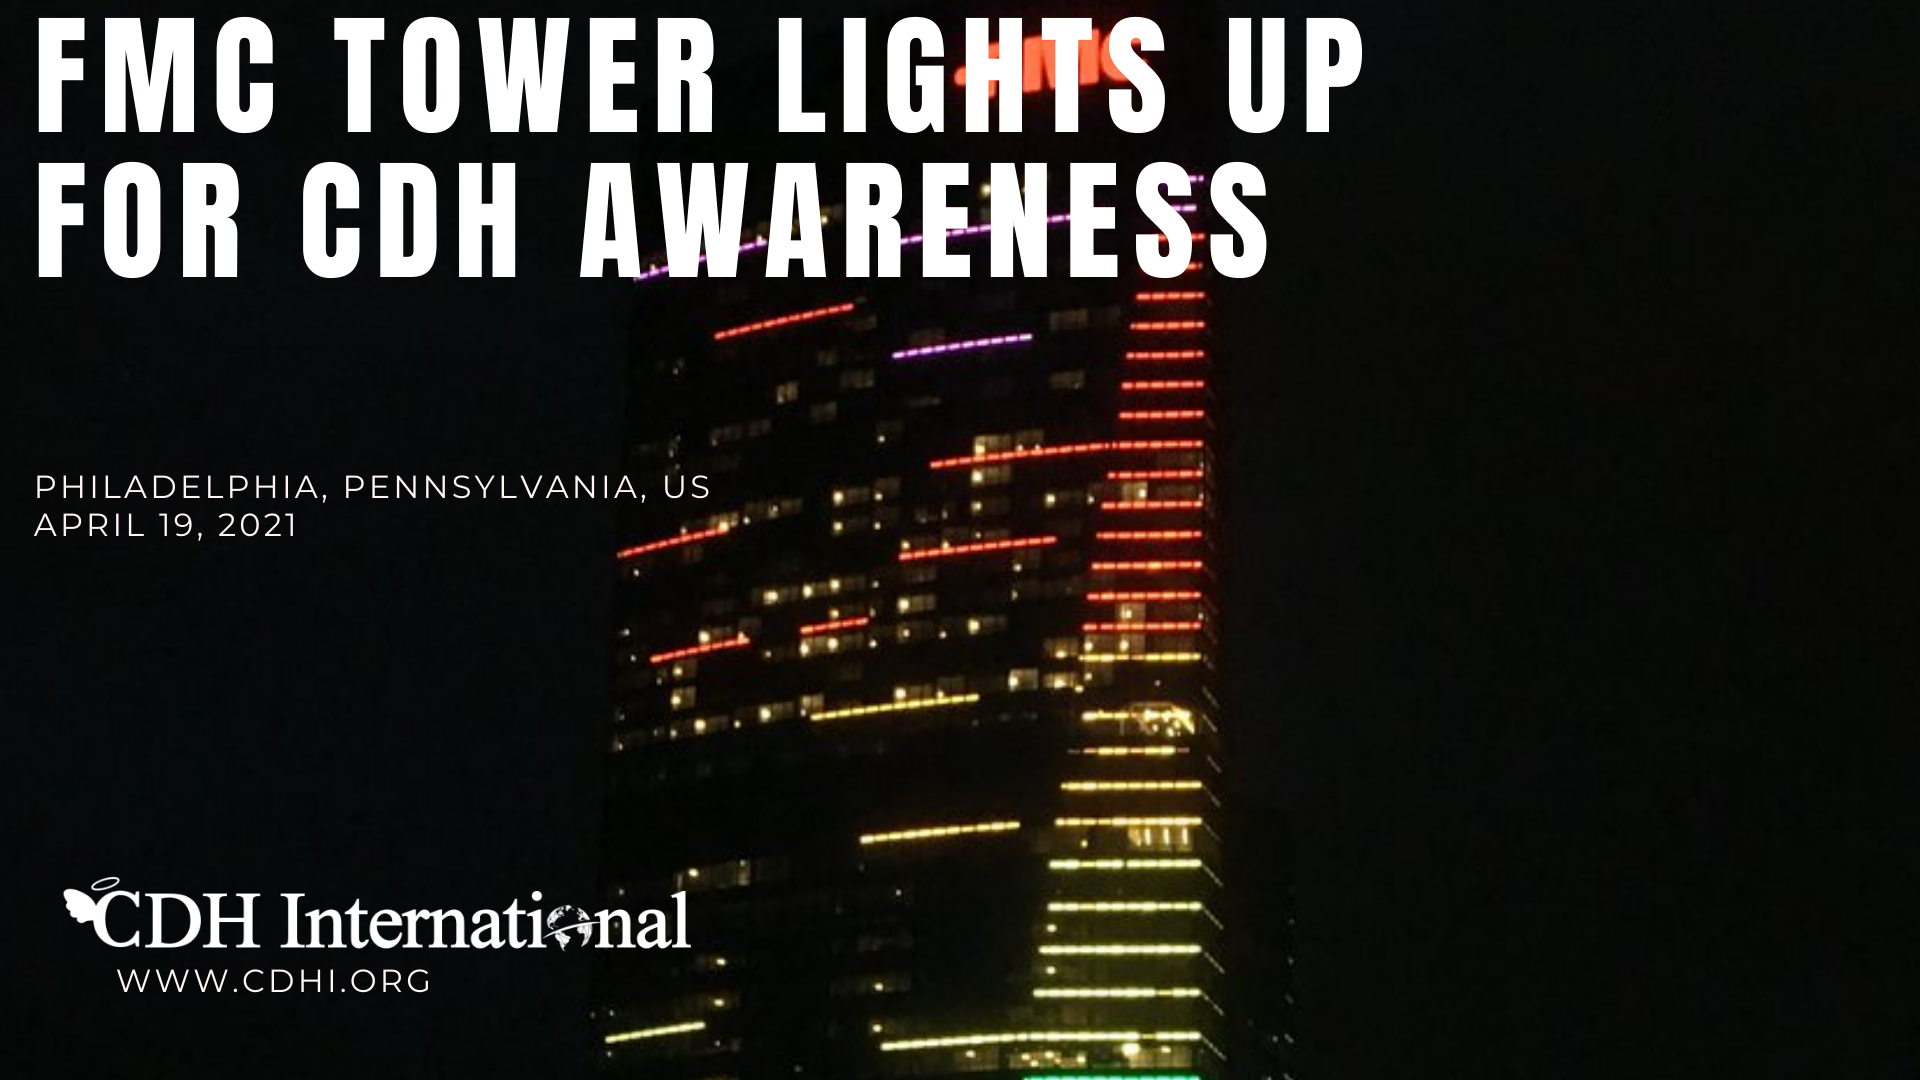 Union Street Railroad Bridge Lights Up For CDH Awareness